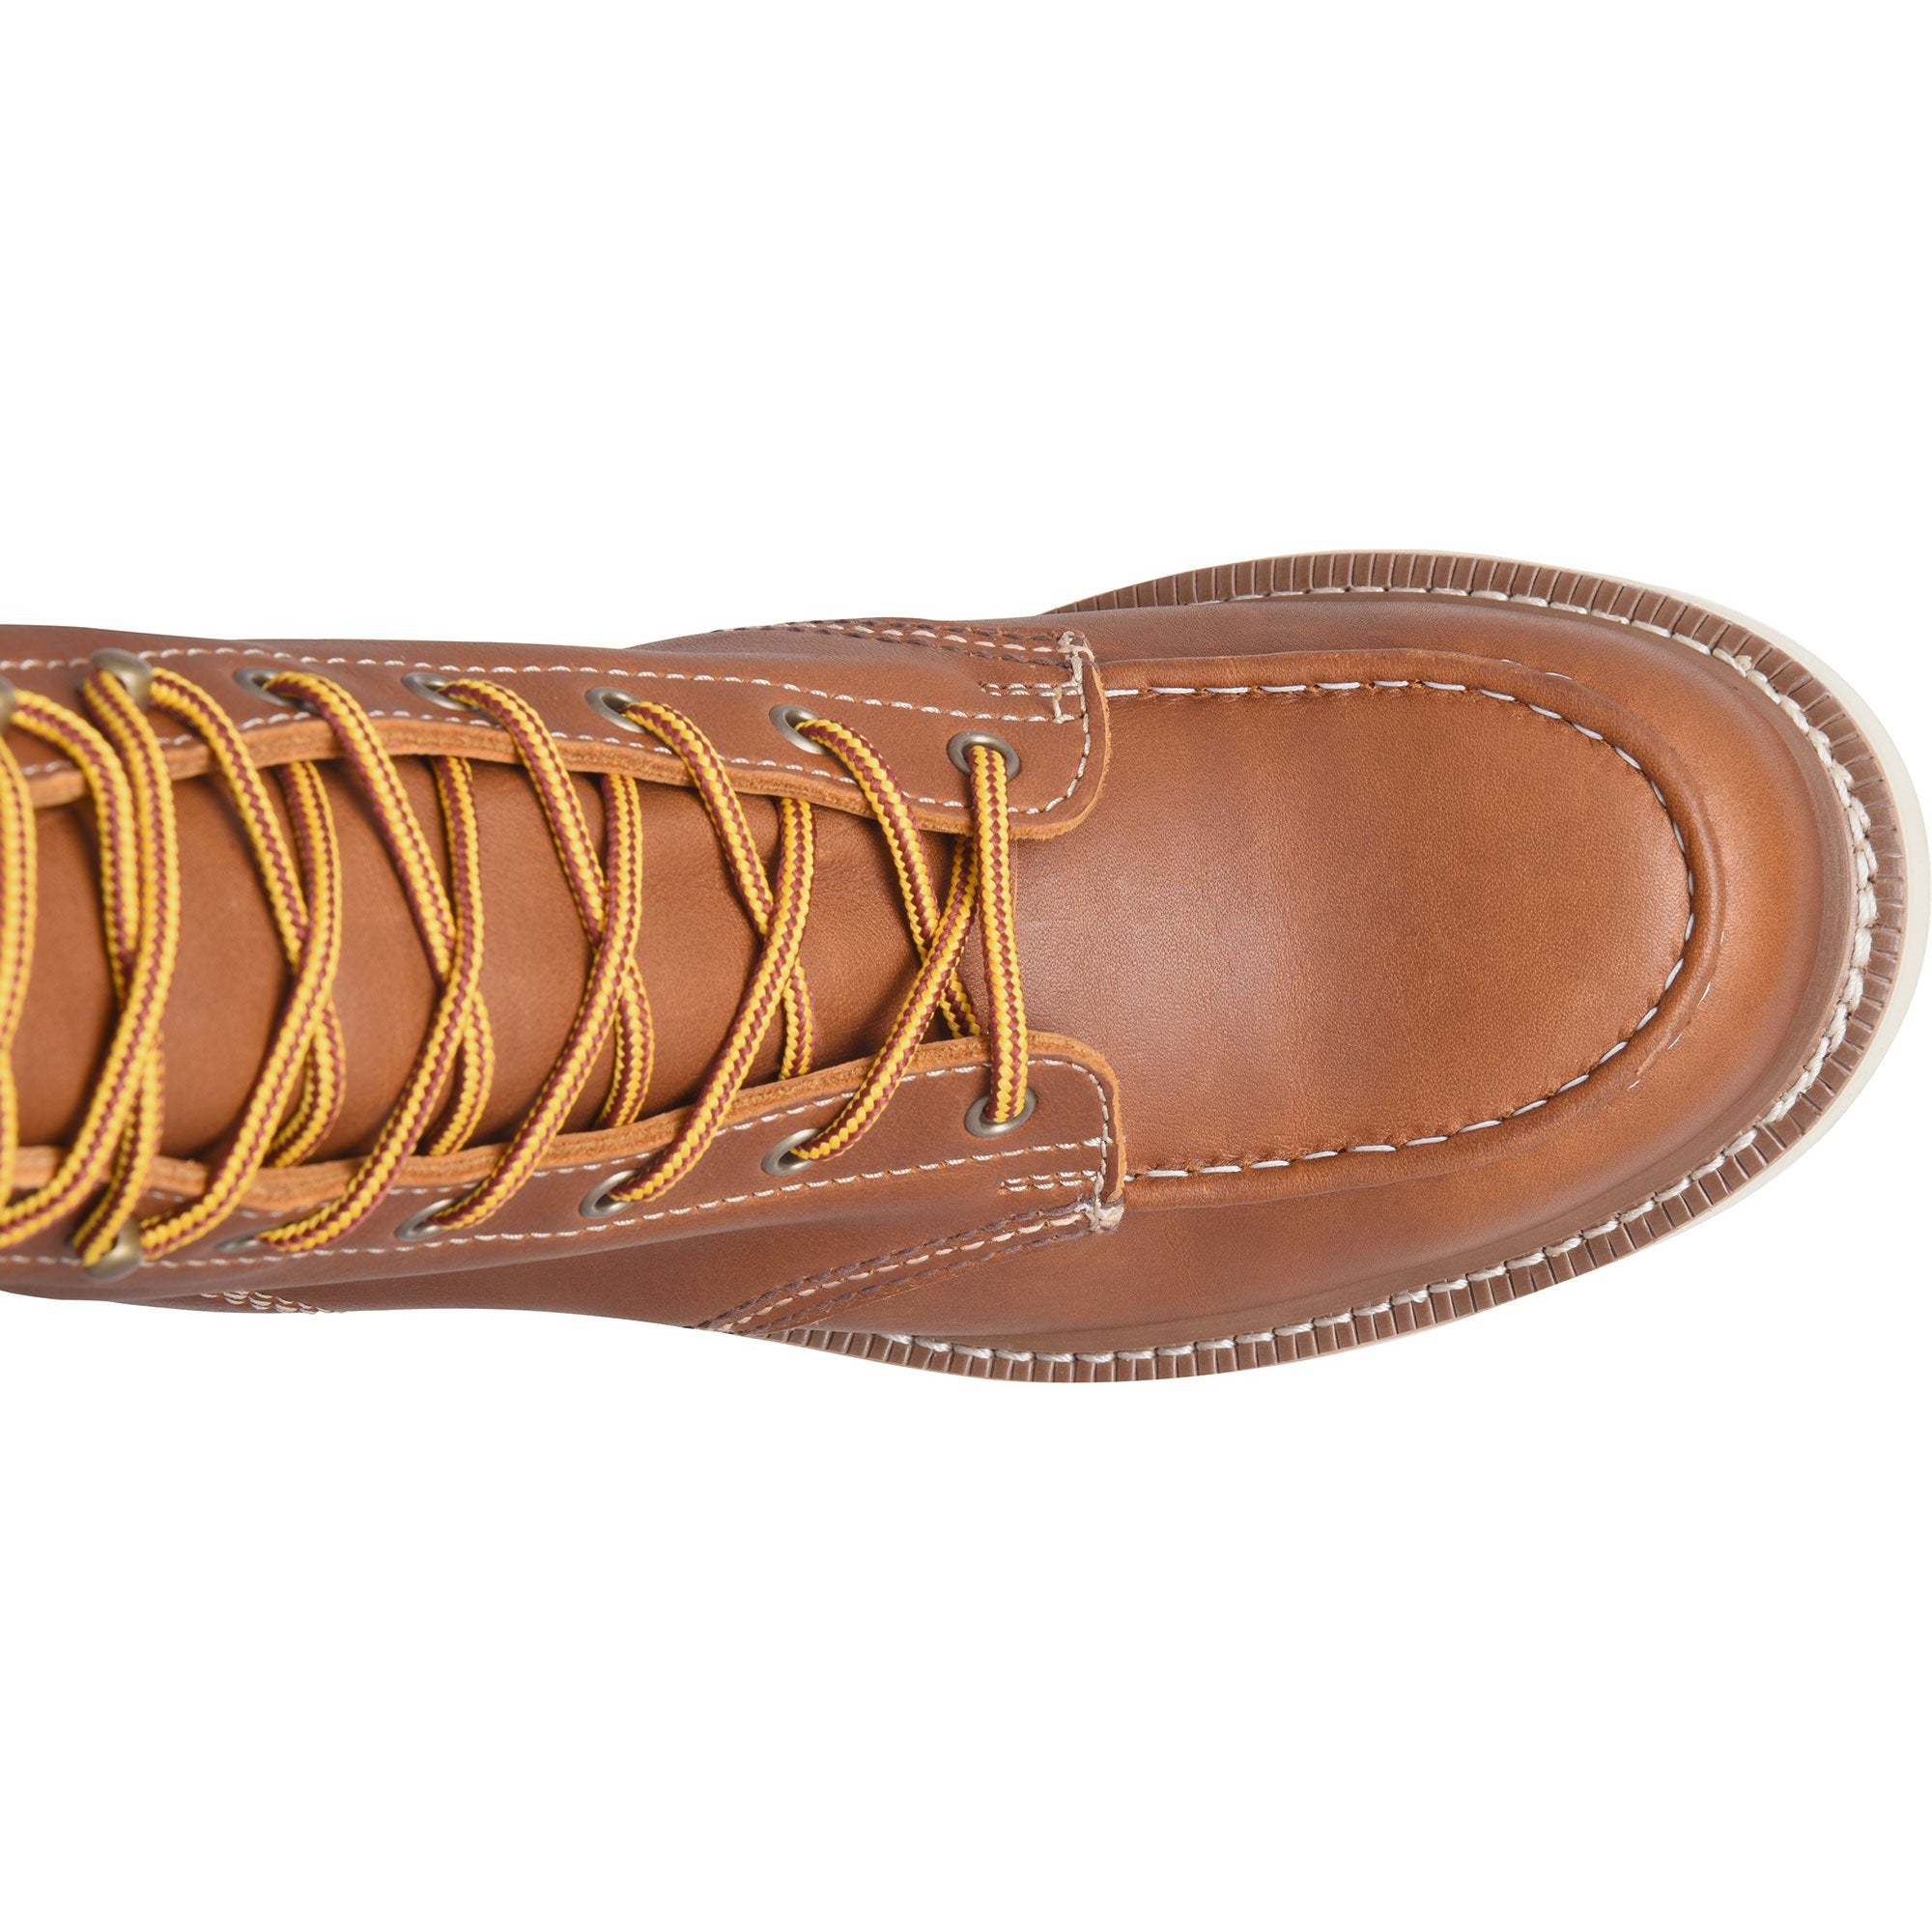 Carolina Men’s Wedge Amp Mx 8" Soft Toe Casual Work Boot Brown - CA7062  - Overlook Boots